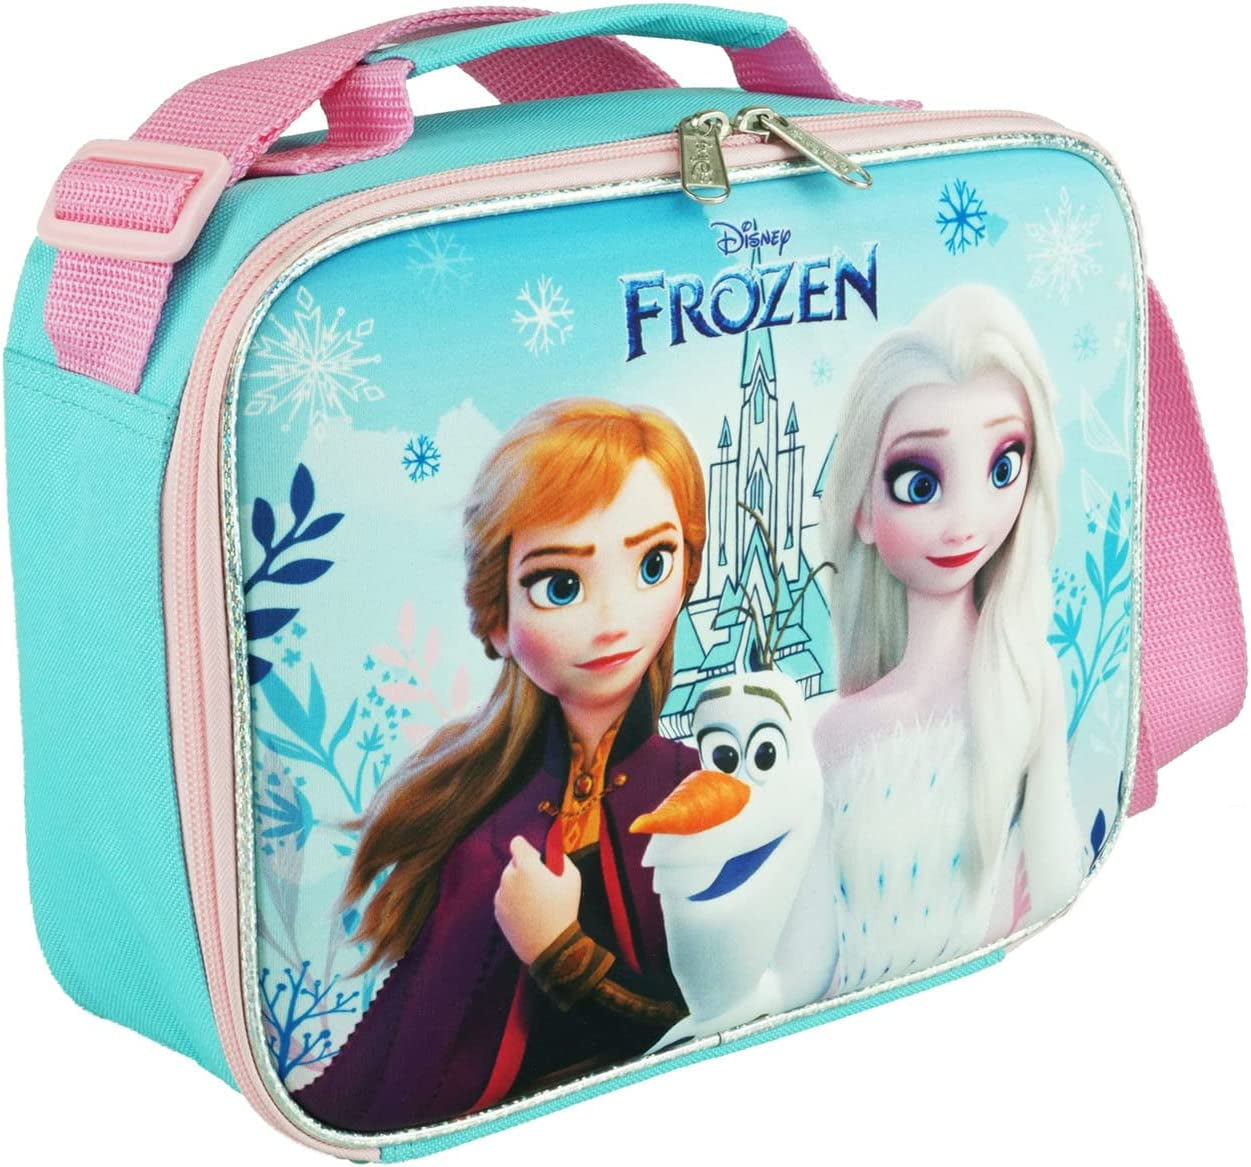 Disney's Frozen Lunch Box - 678634288301